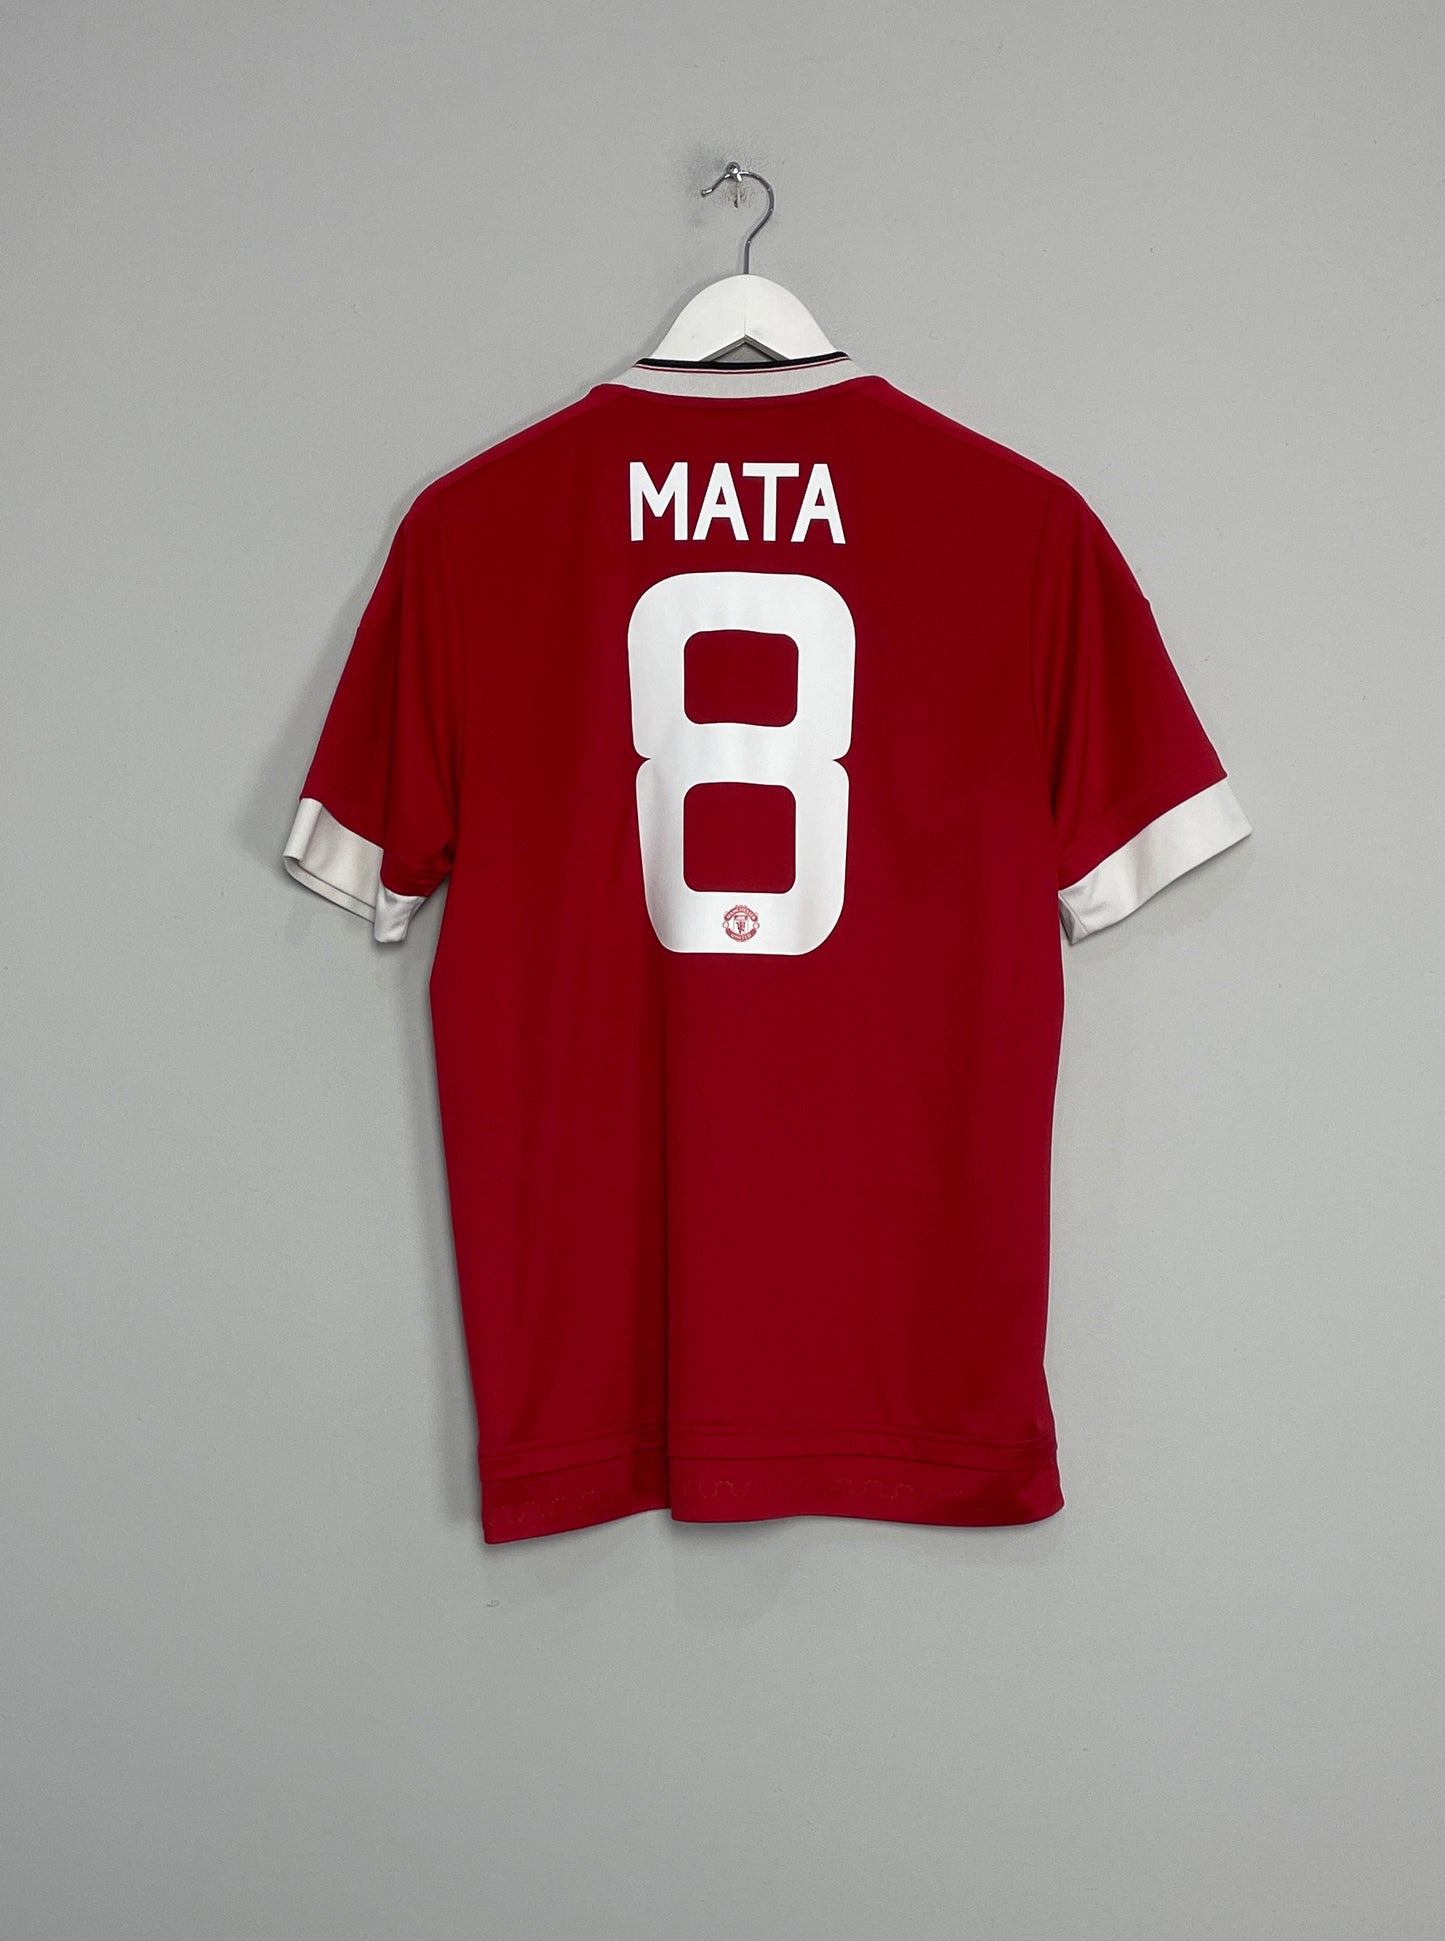 Image of Manchester United Mata shirt from the 2015/16 season